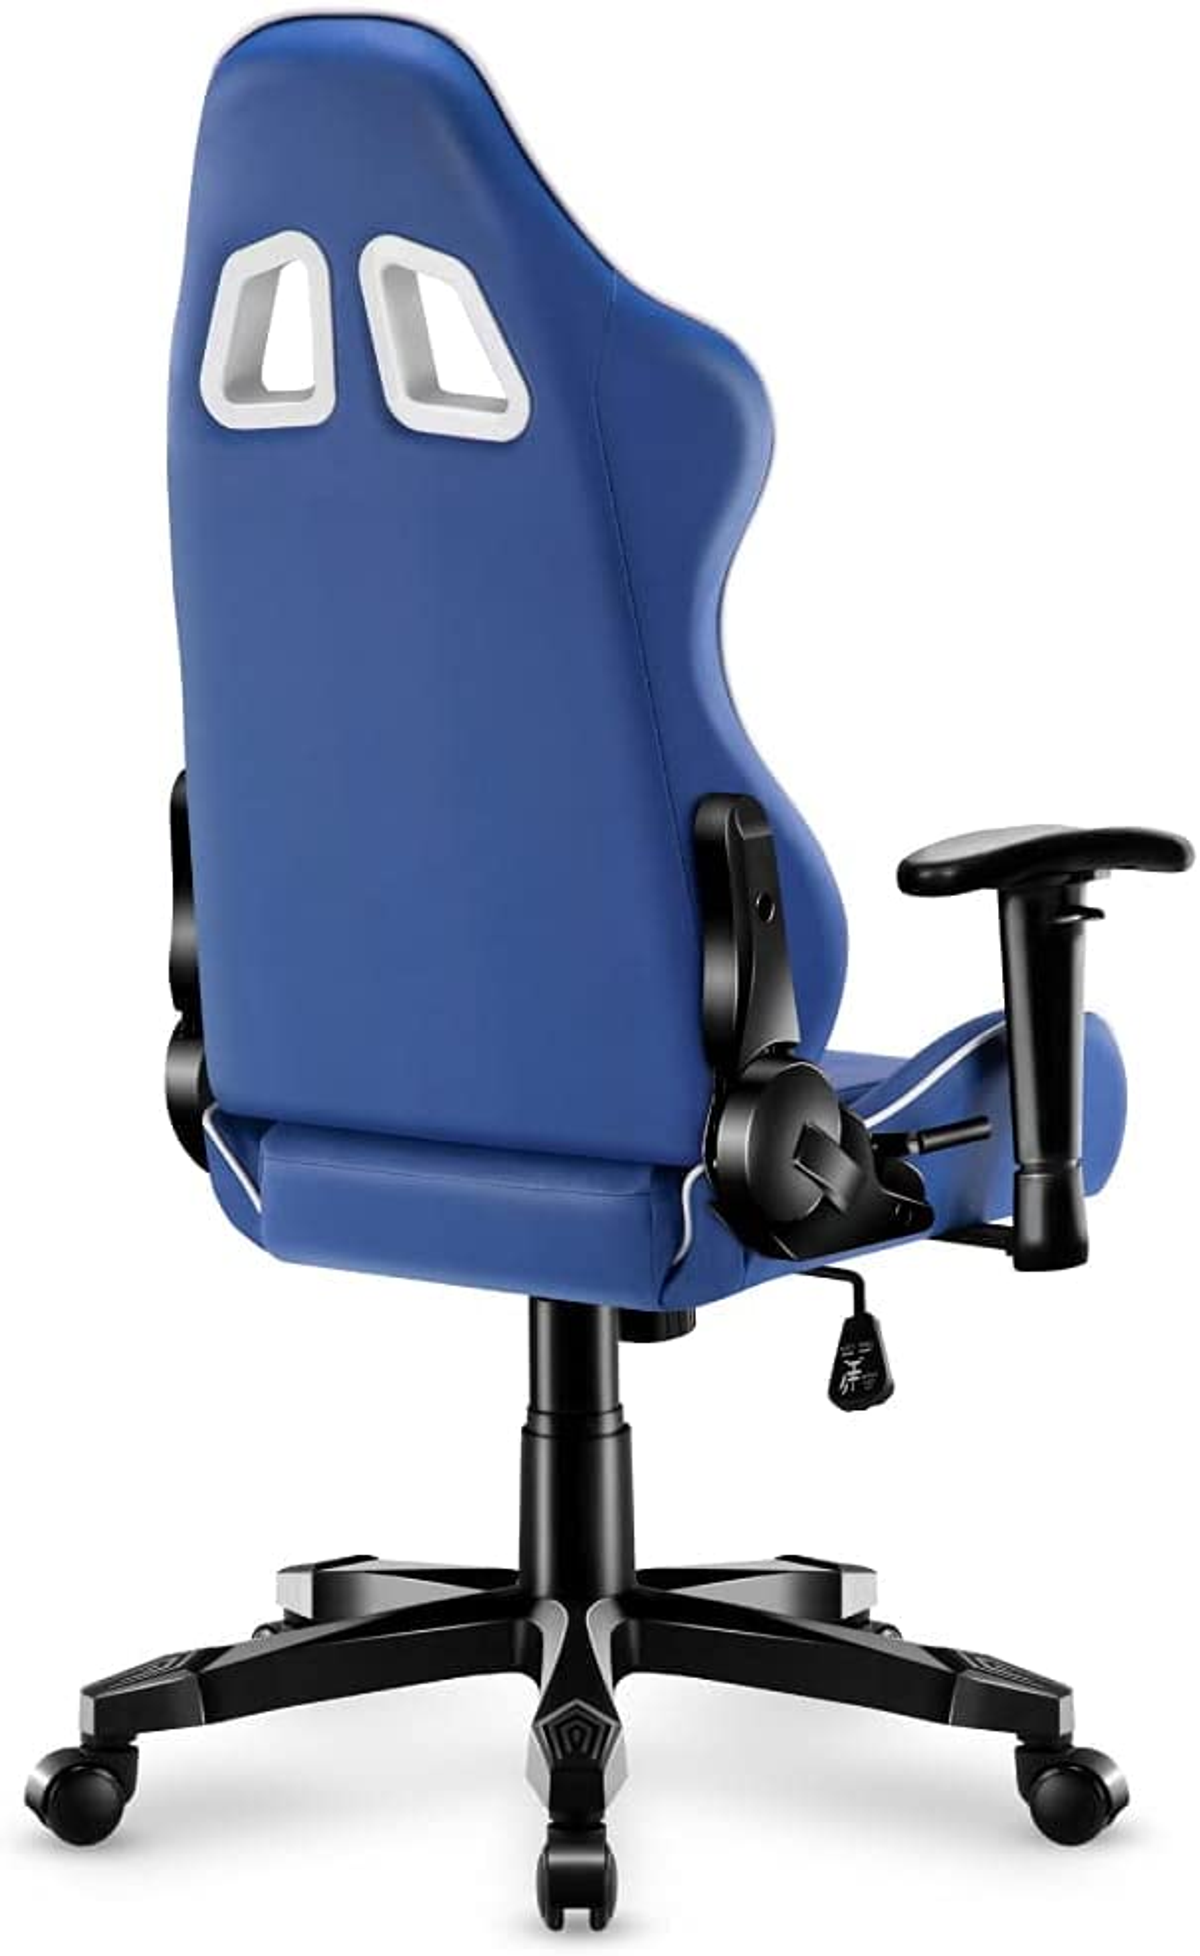 HUZARO Ranger 6.0 Ergonomisches Design Gaming Blau Nackenkissen Lendenkissen Stuhl